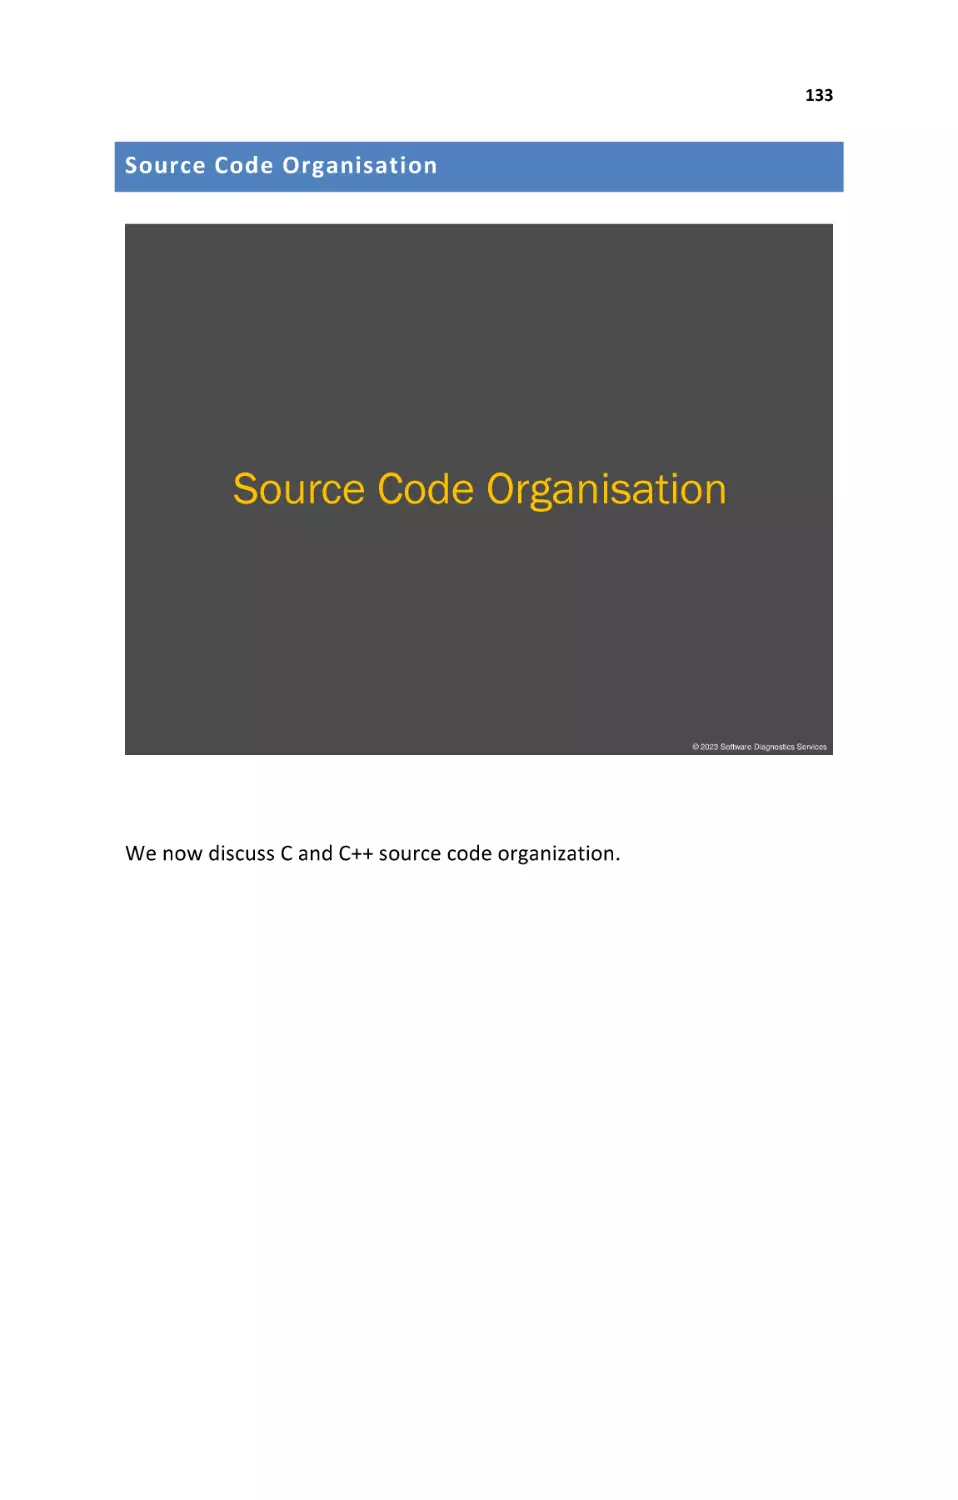 Source Code Organisation